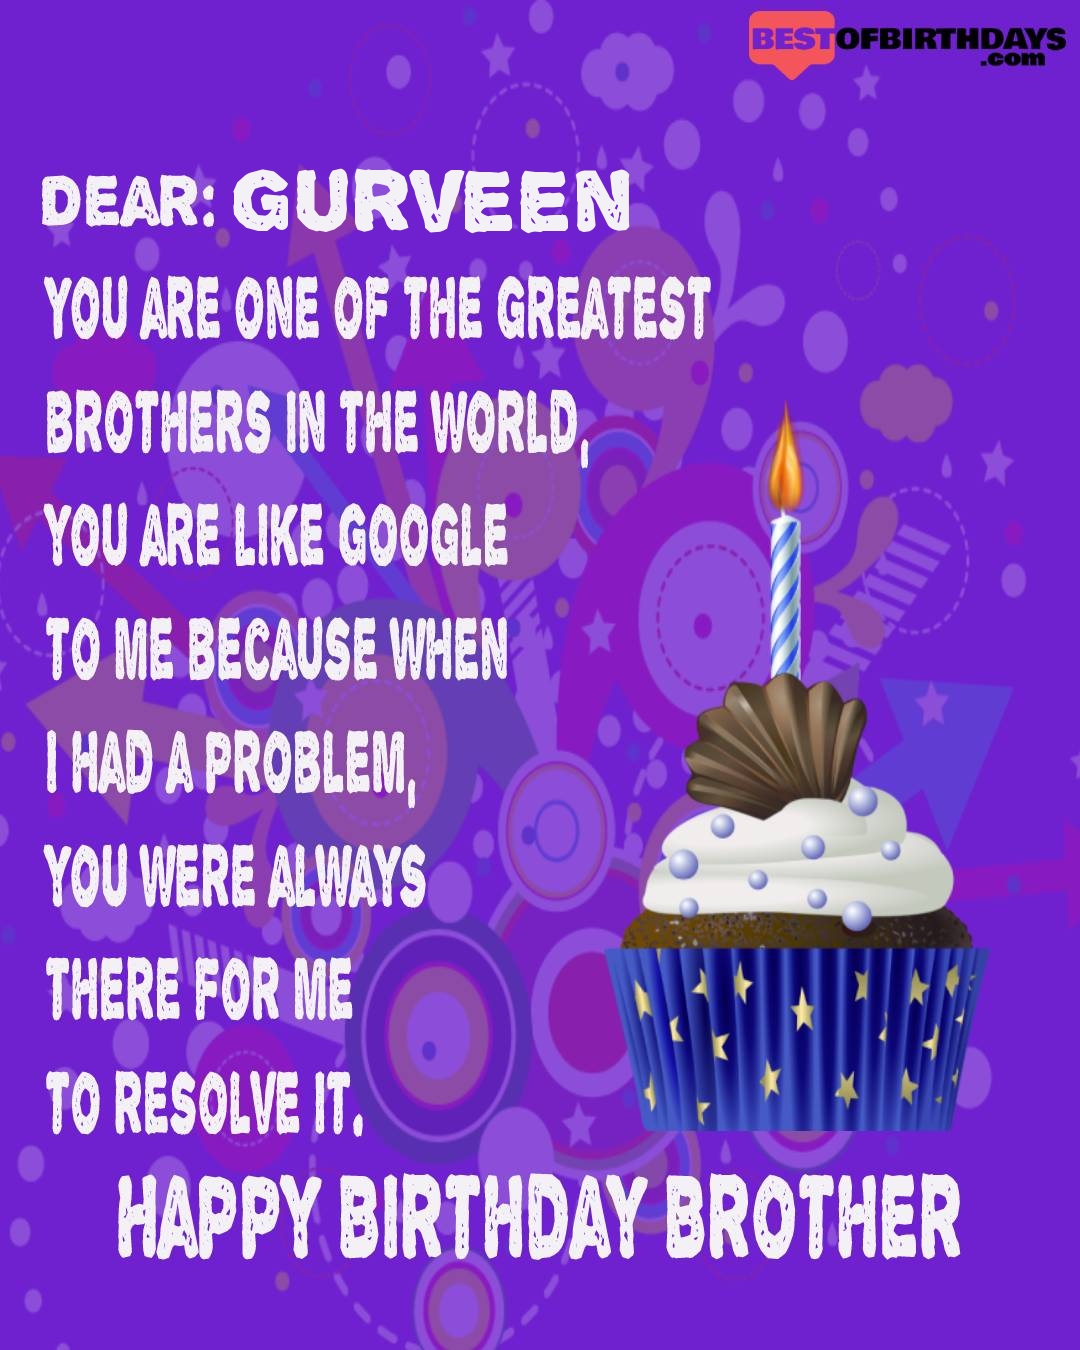 Happy birthday gurveen bhai brother bro